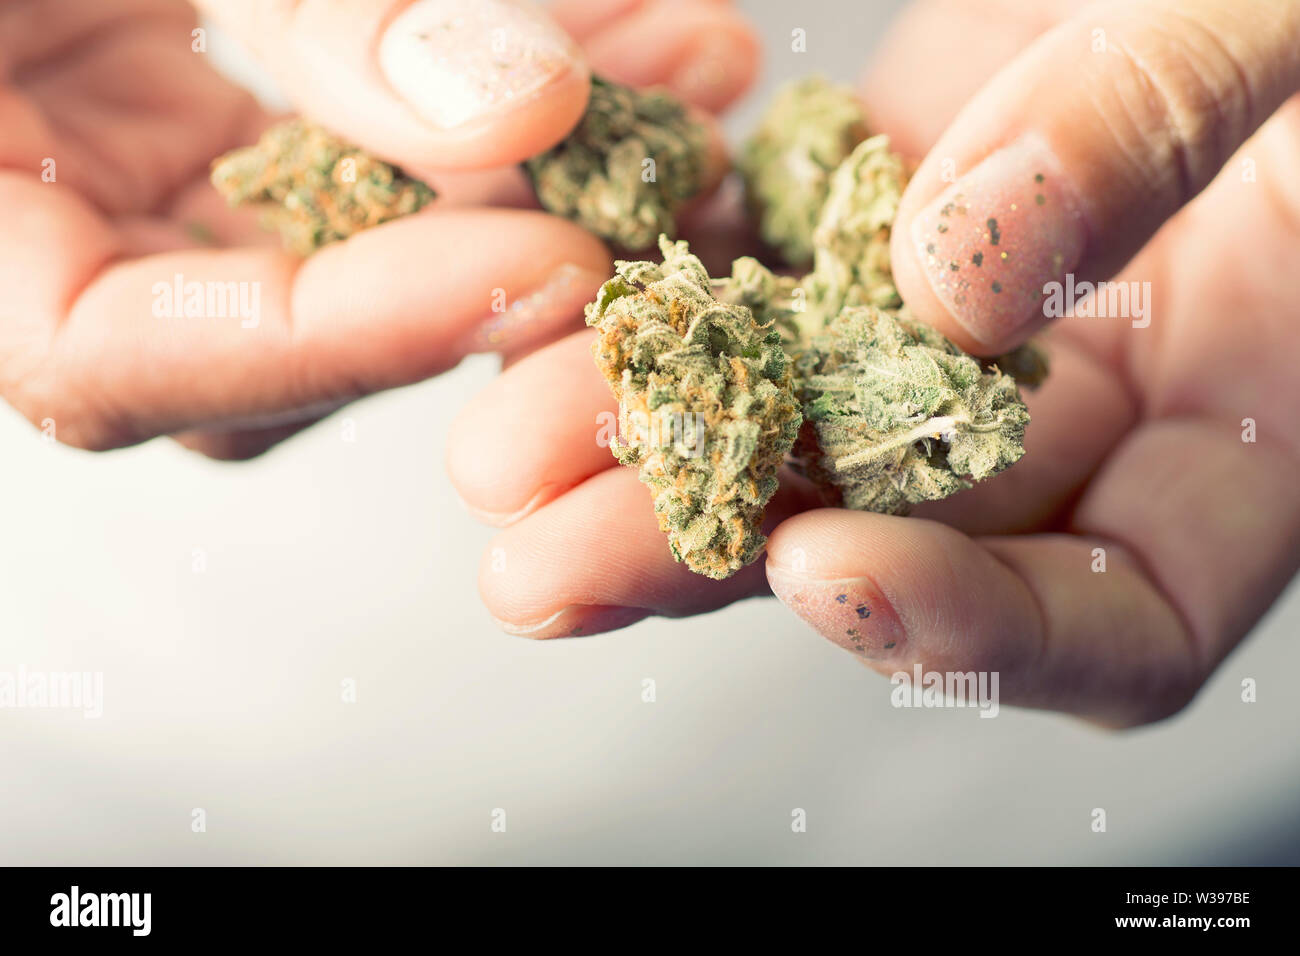 Hands holding Cannabis Buds, Dried Marijuana, Weed Stock Photo